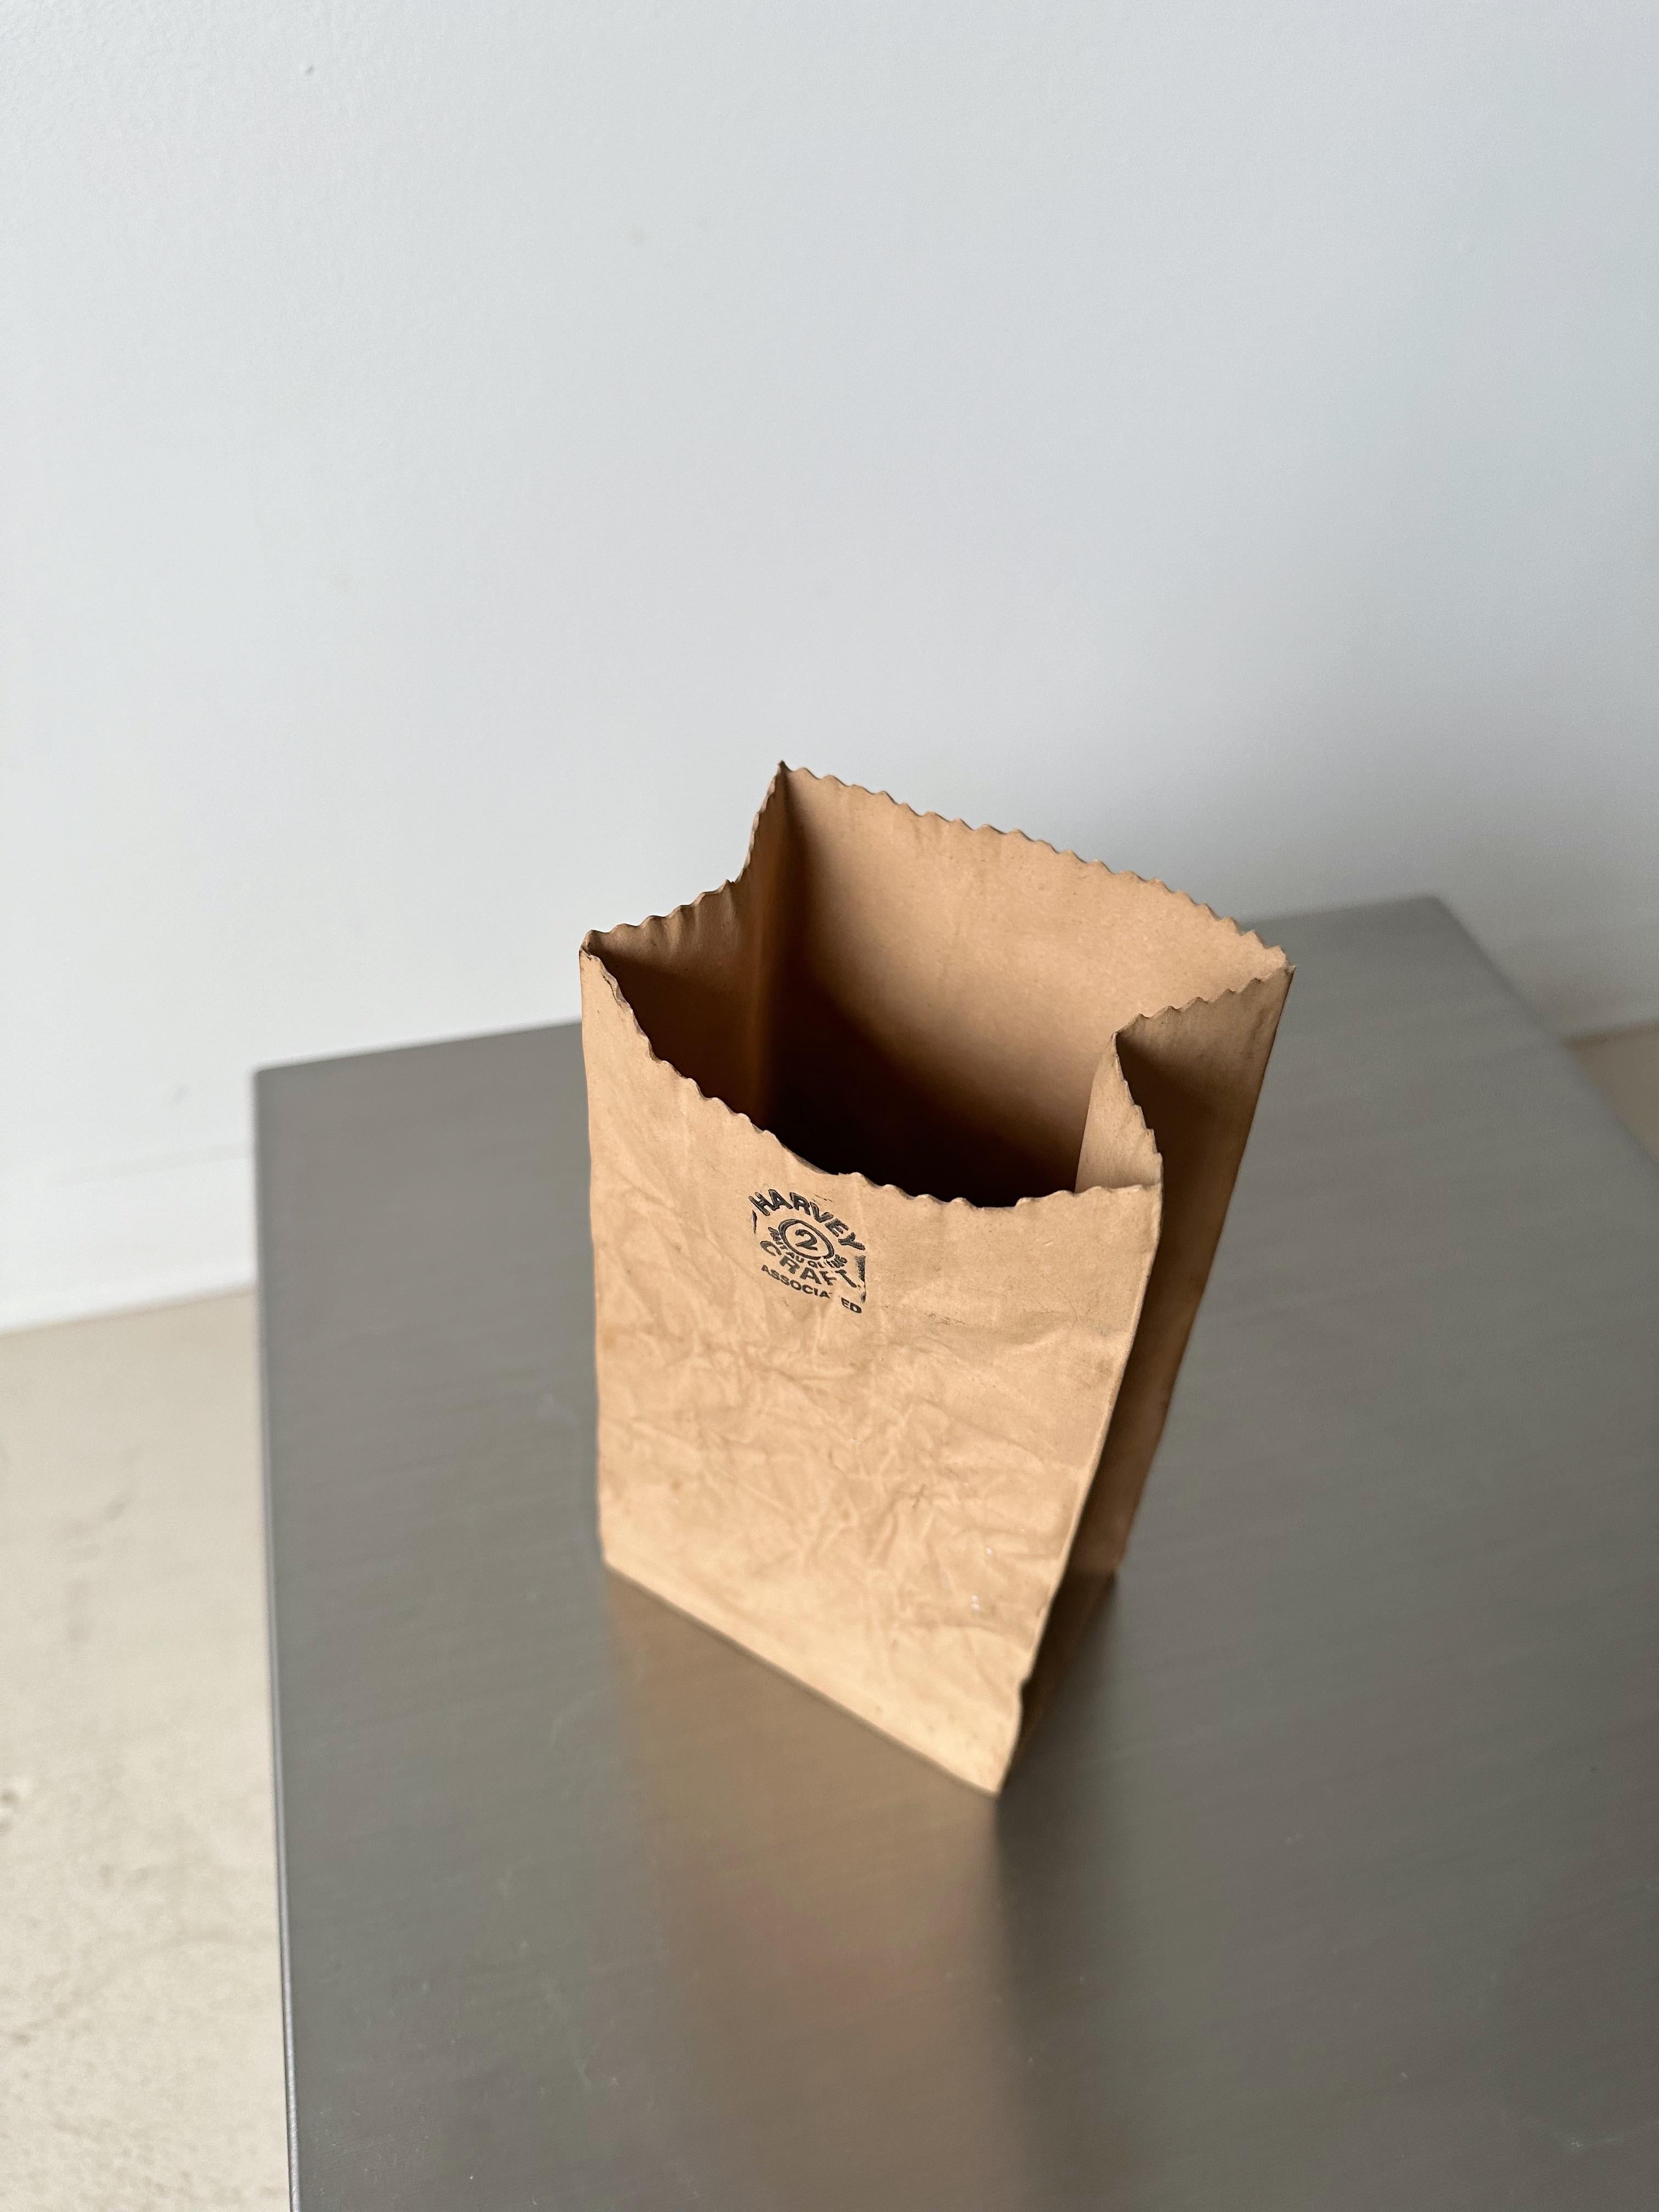 Ceramic Trompe L-oeil Brown Paper Bag Vase by Michael Harvey, 80's

Made in Canada

//  

Dimensions: 
4”W x 2.5